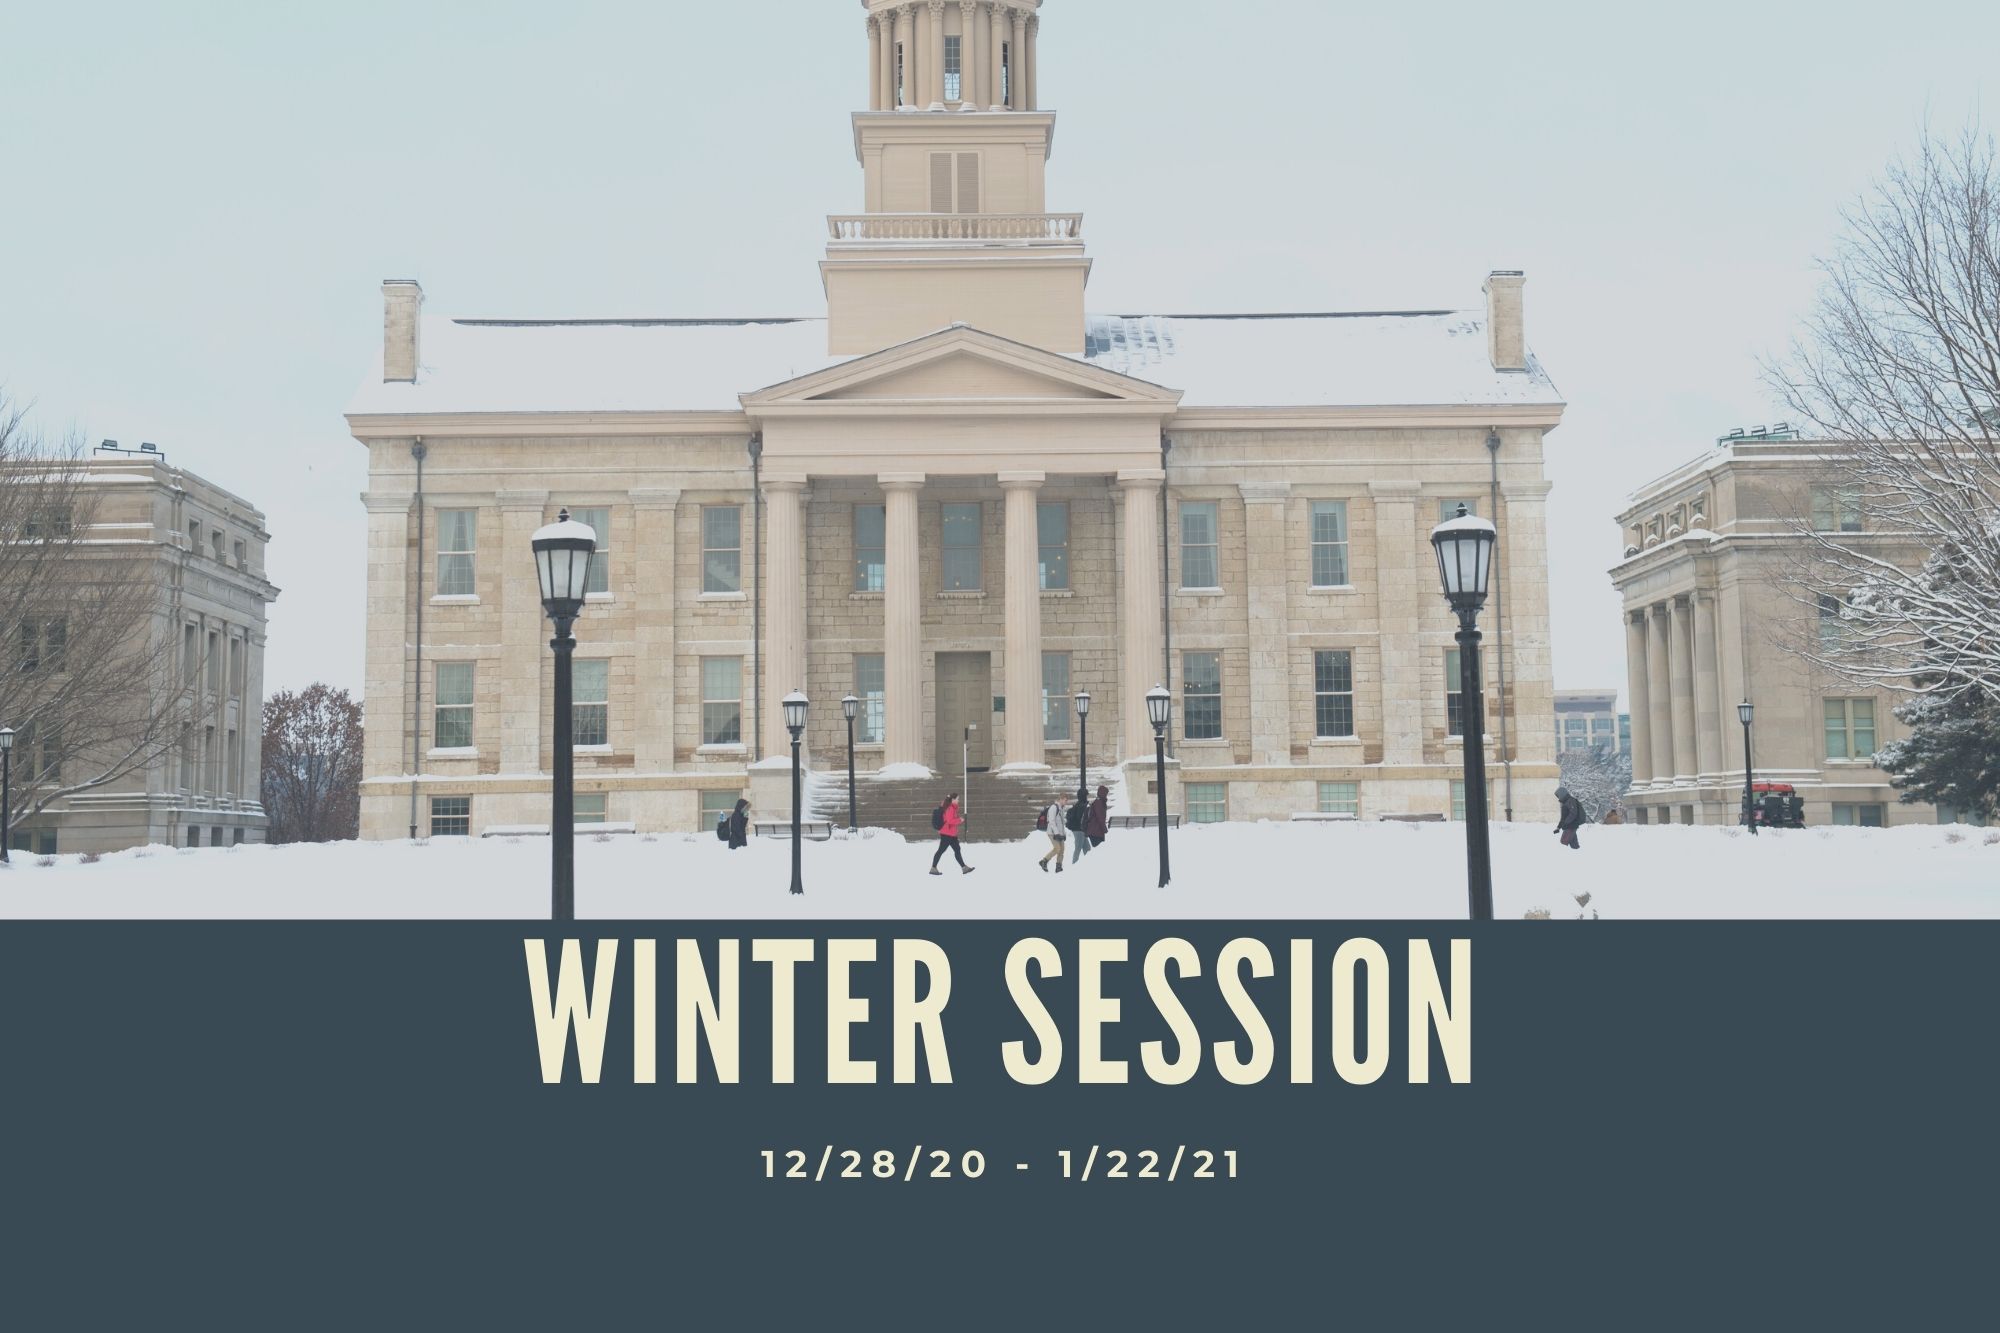 Winter Session dates